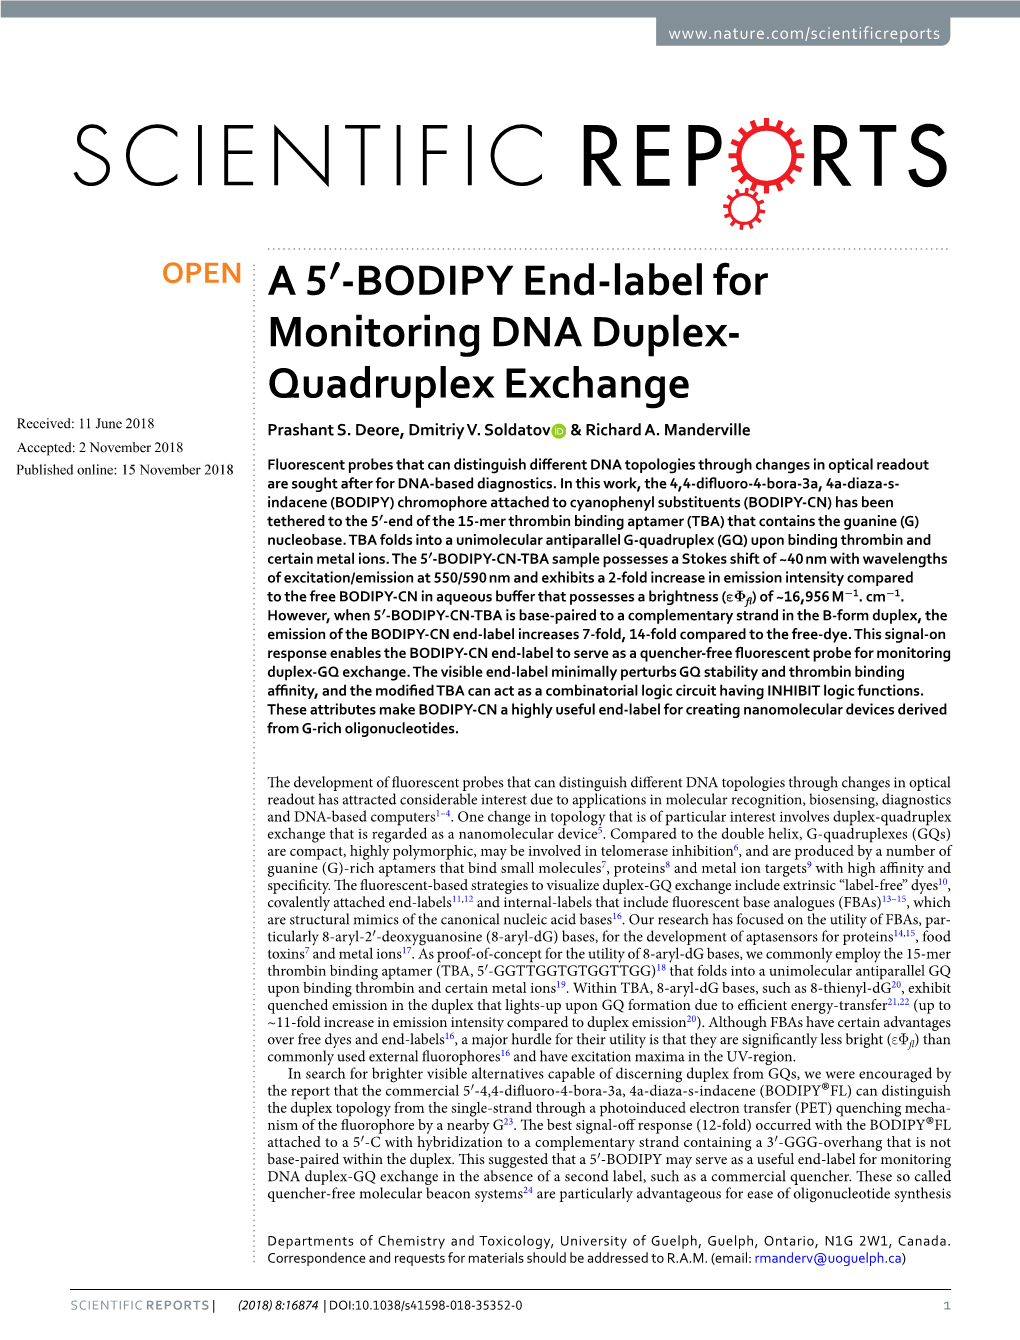 BODIPY End-Label for Monitoring DNA Duplex-Quadruplex Exchange